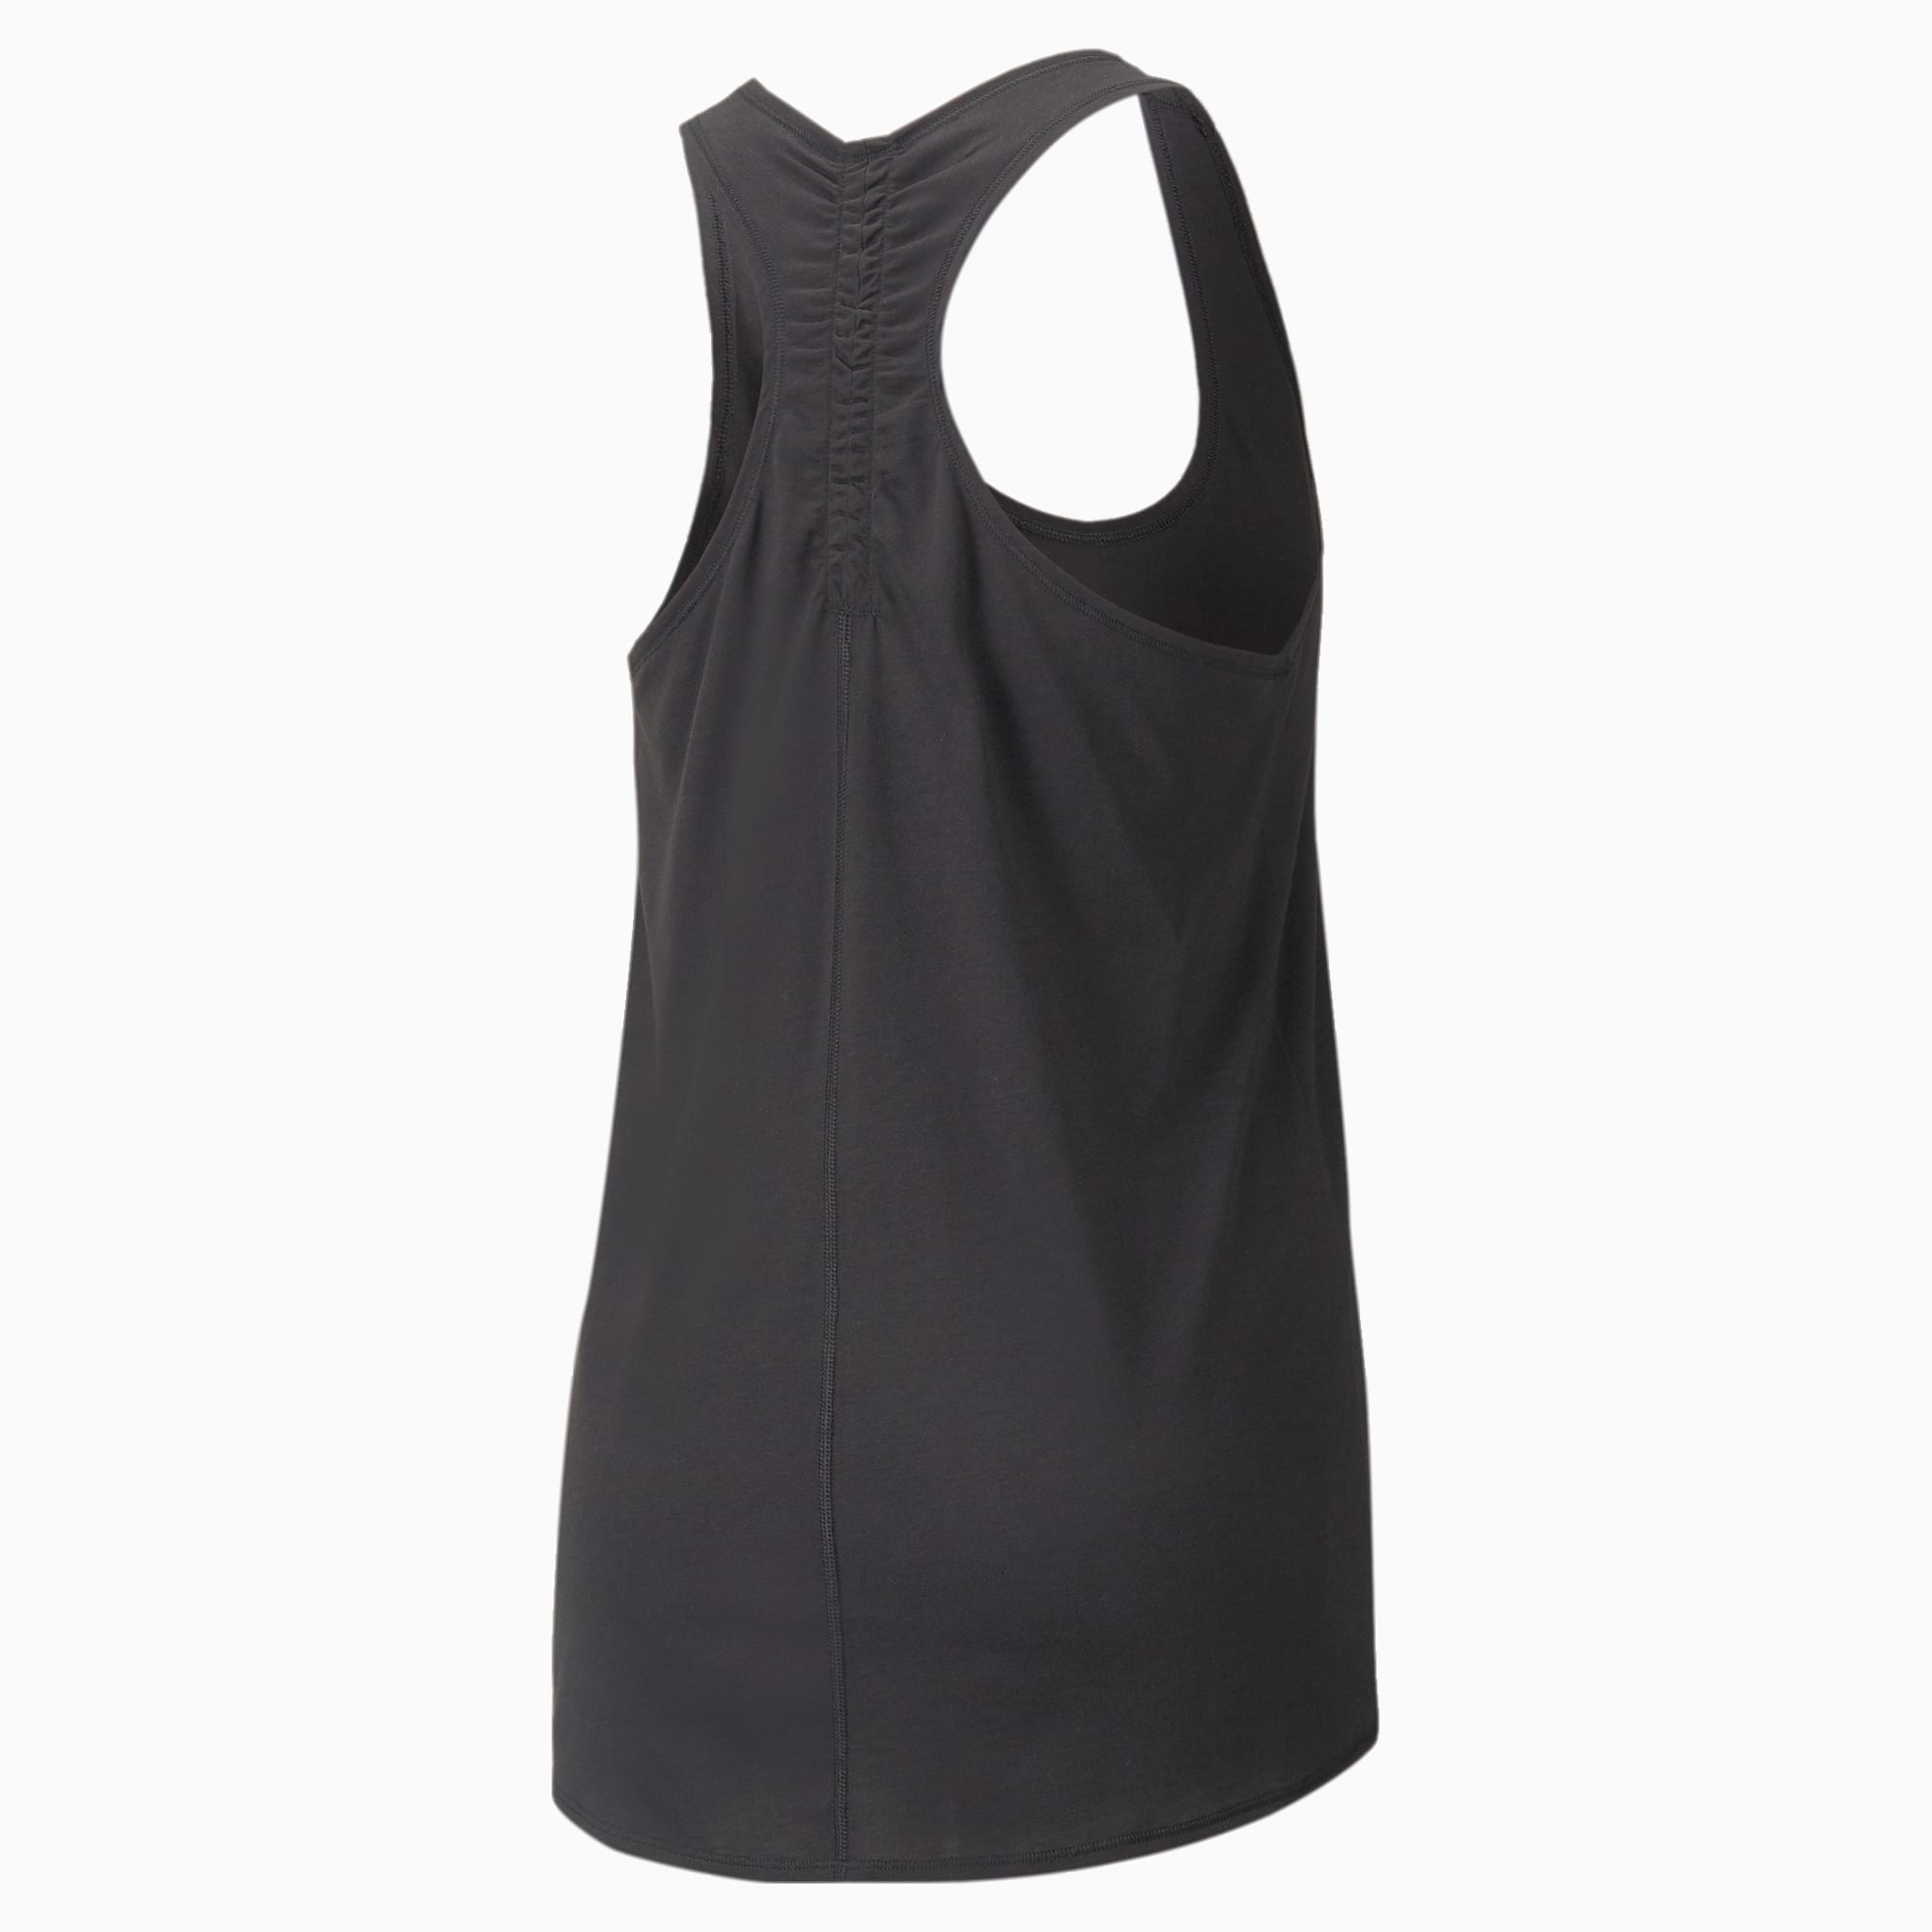 PUMA Studio Foundation Relax Women's Training Tank Top Shirt, Black, Size XS, Clothing